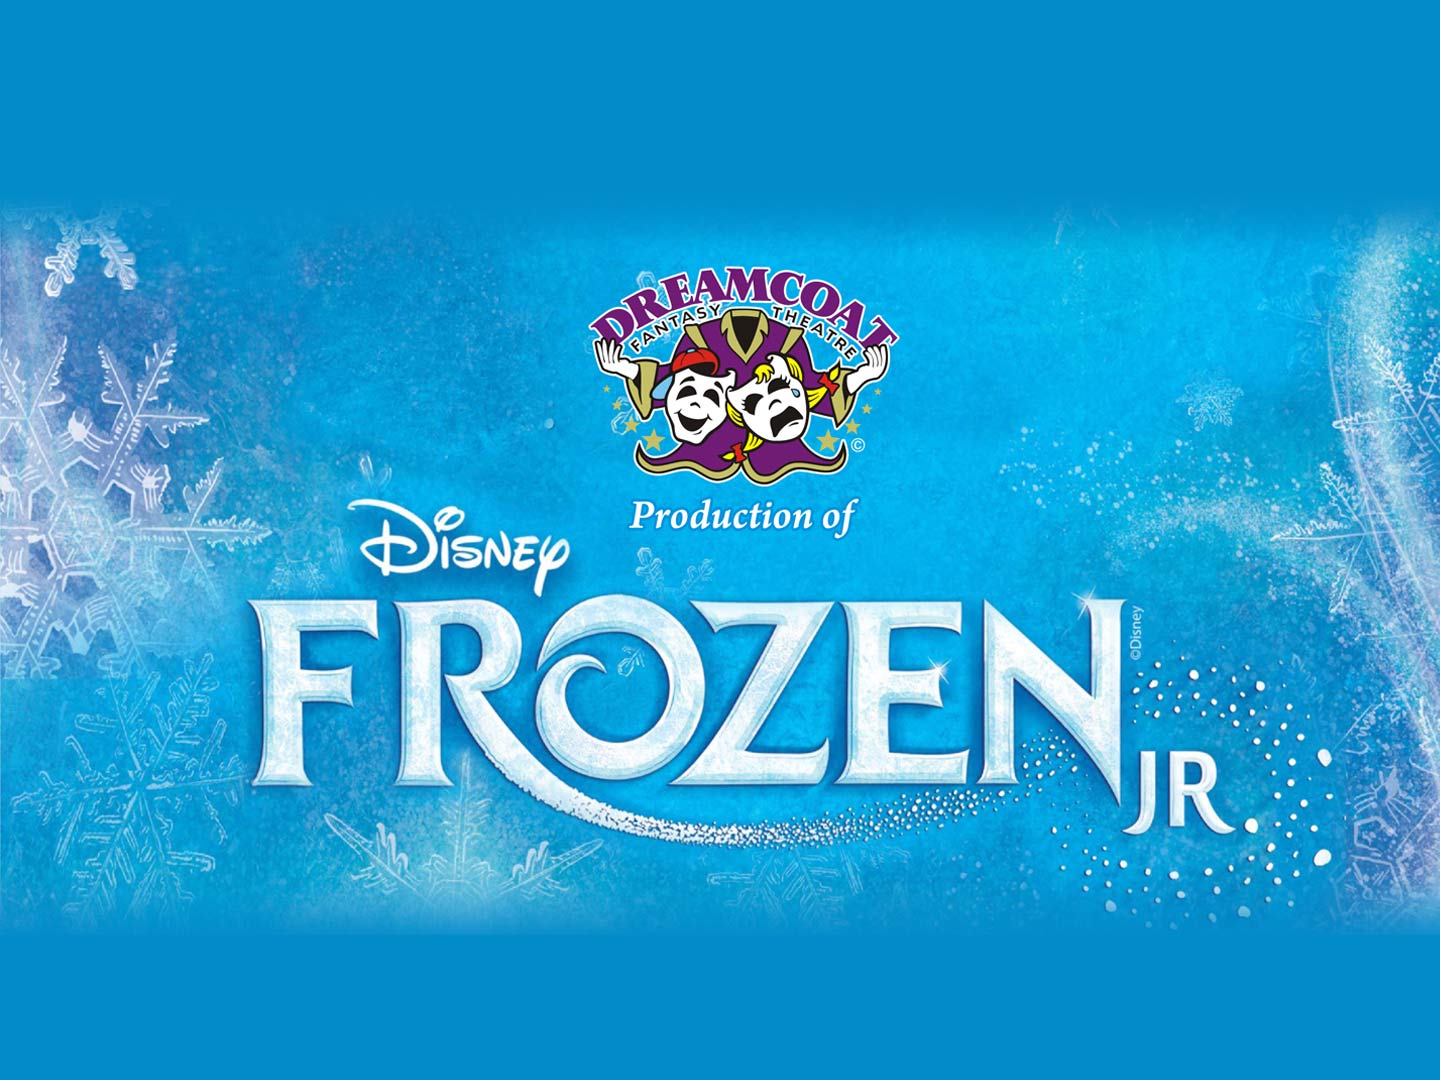 Dreamcoat presents Frozen Jr